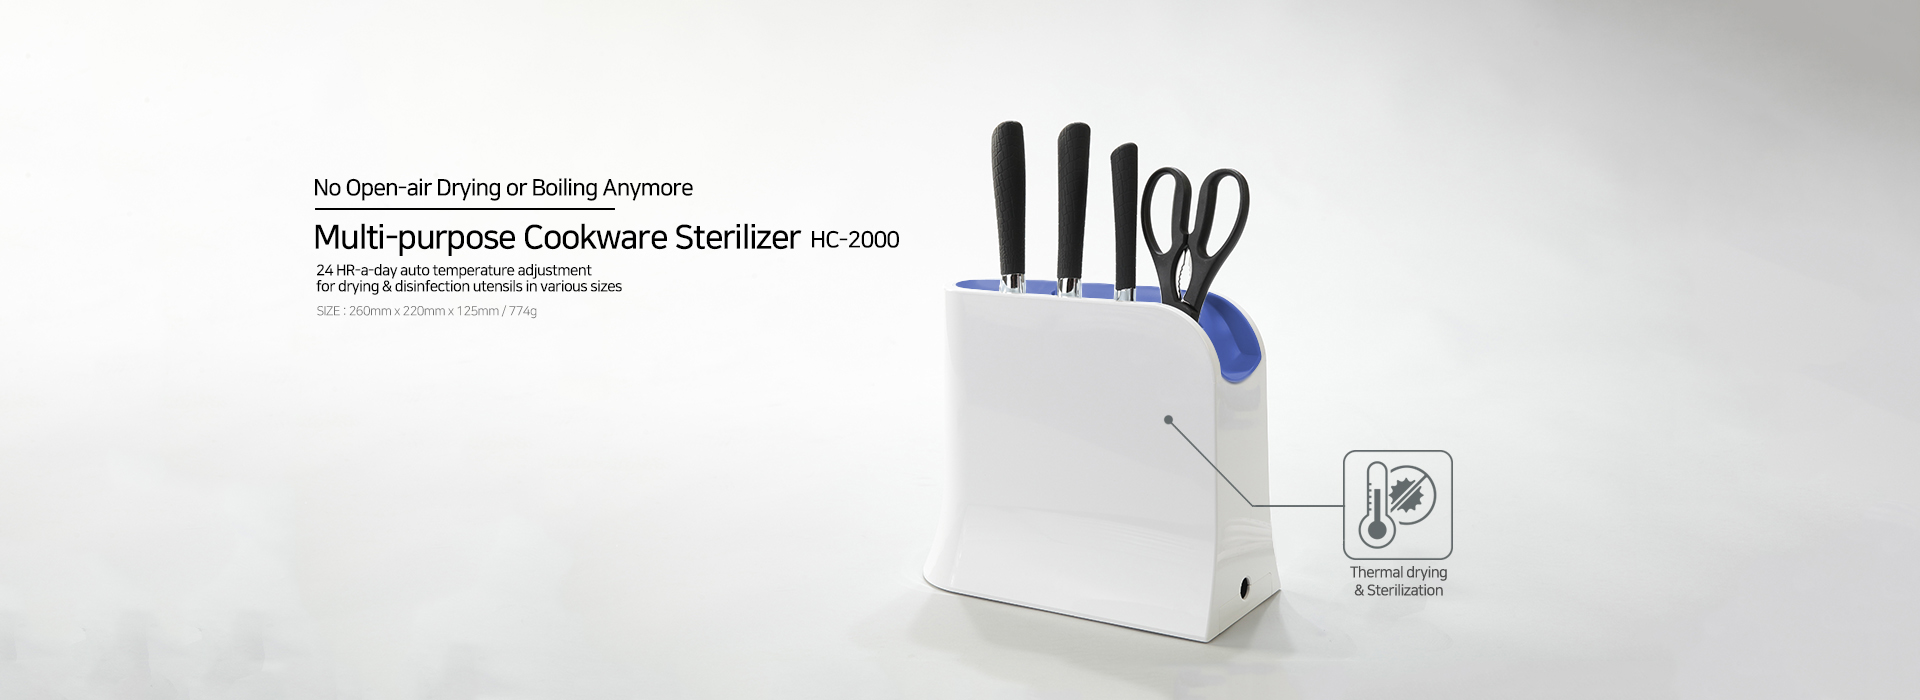 HC-2000: Multi-purpose Cookware Sterilizer